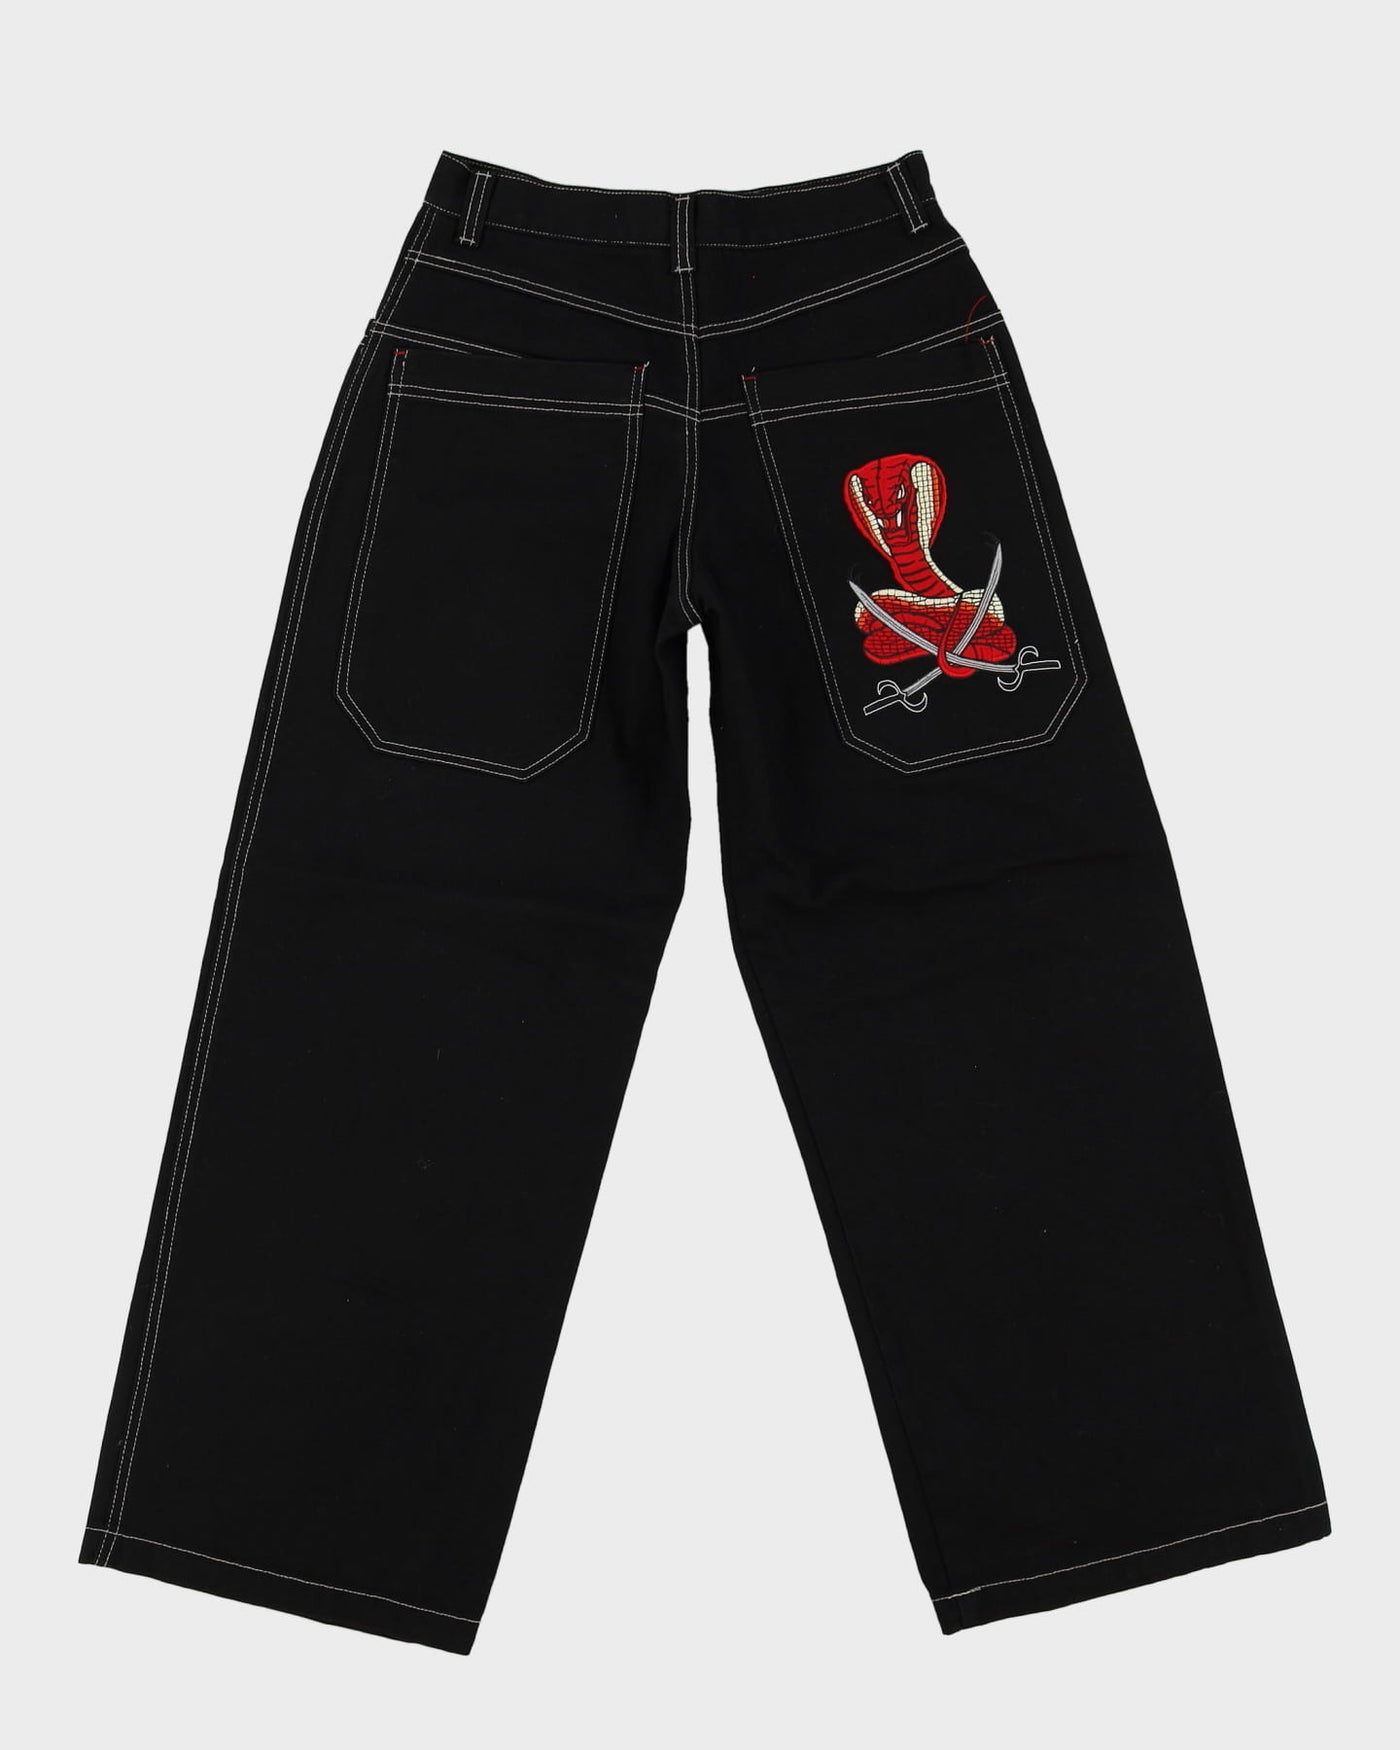 00s Y2K Extreme Zone Black Baggy Oversized Contrast Stitch Jeans - W27 L29